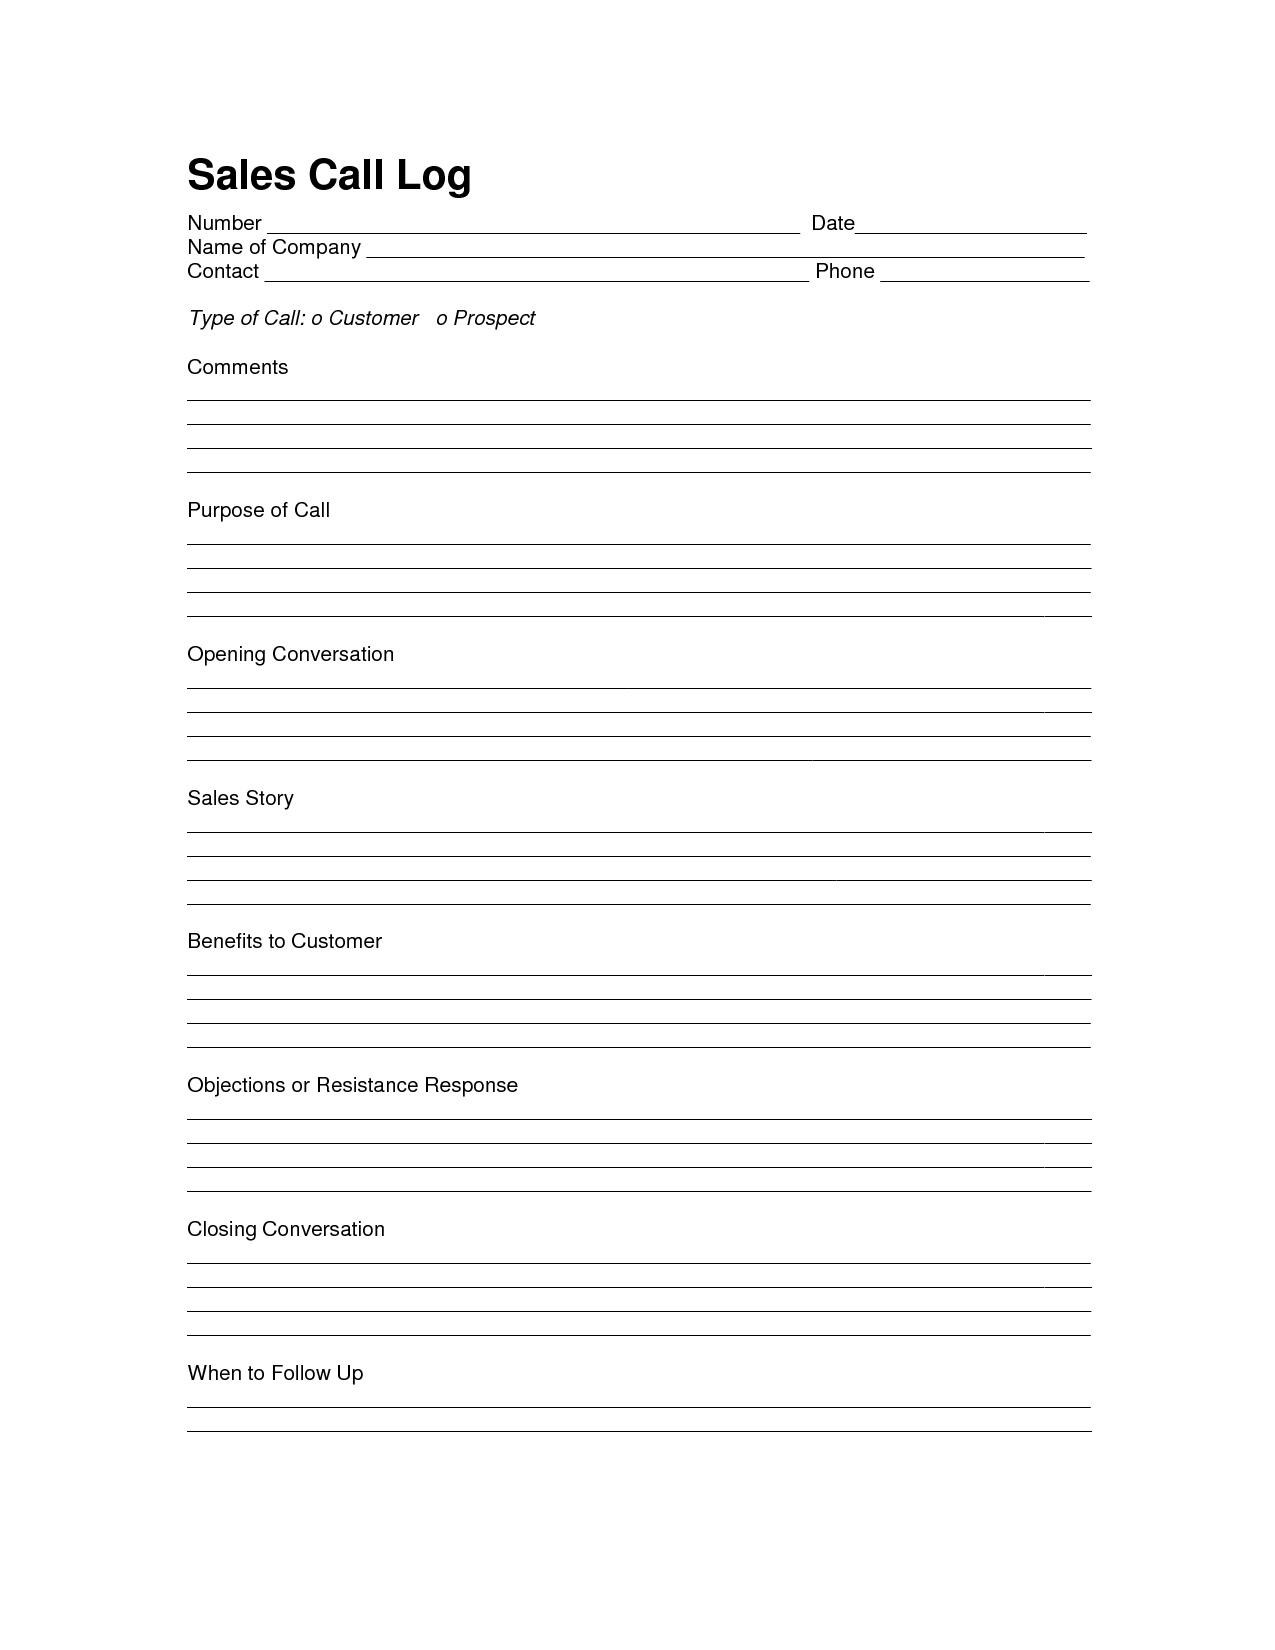 Sales Log Sheet Template | Sales Call Log Template | Call For Sales Call Report Template